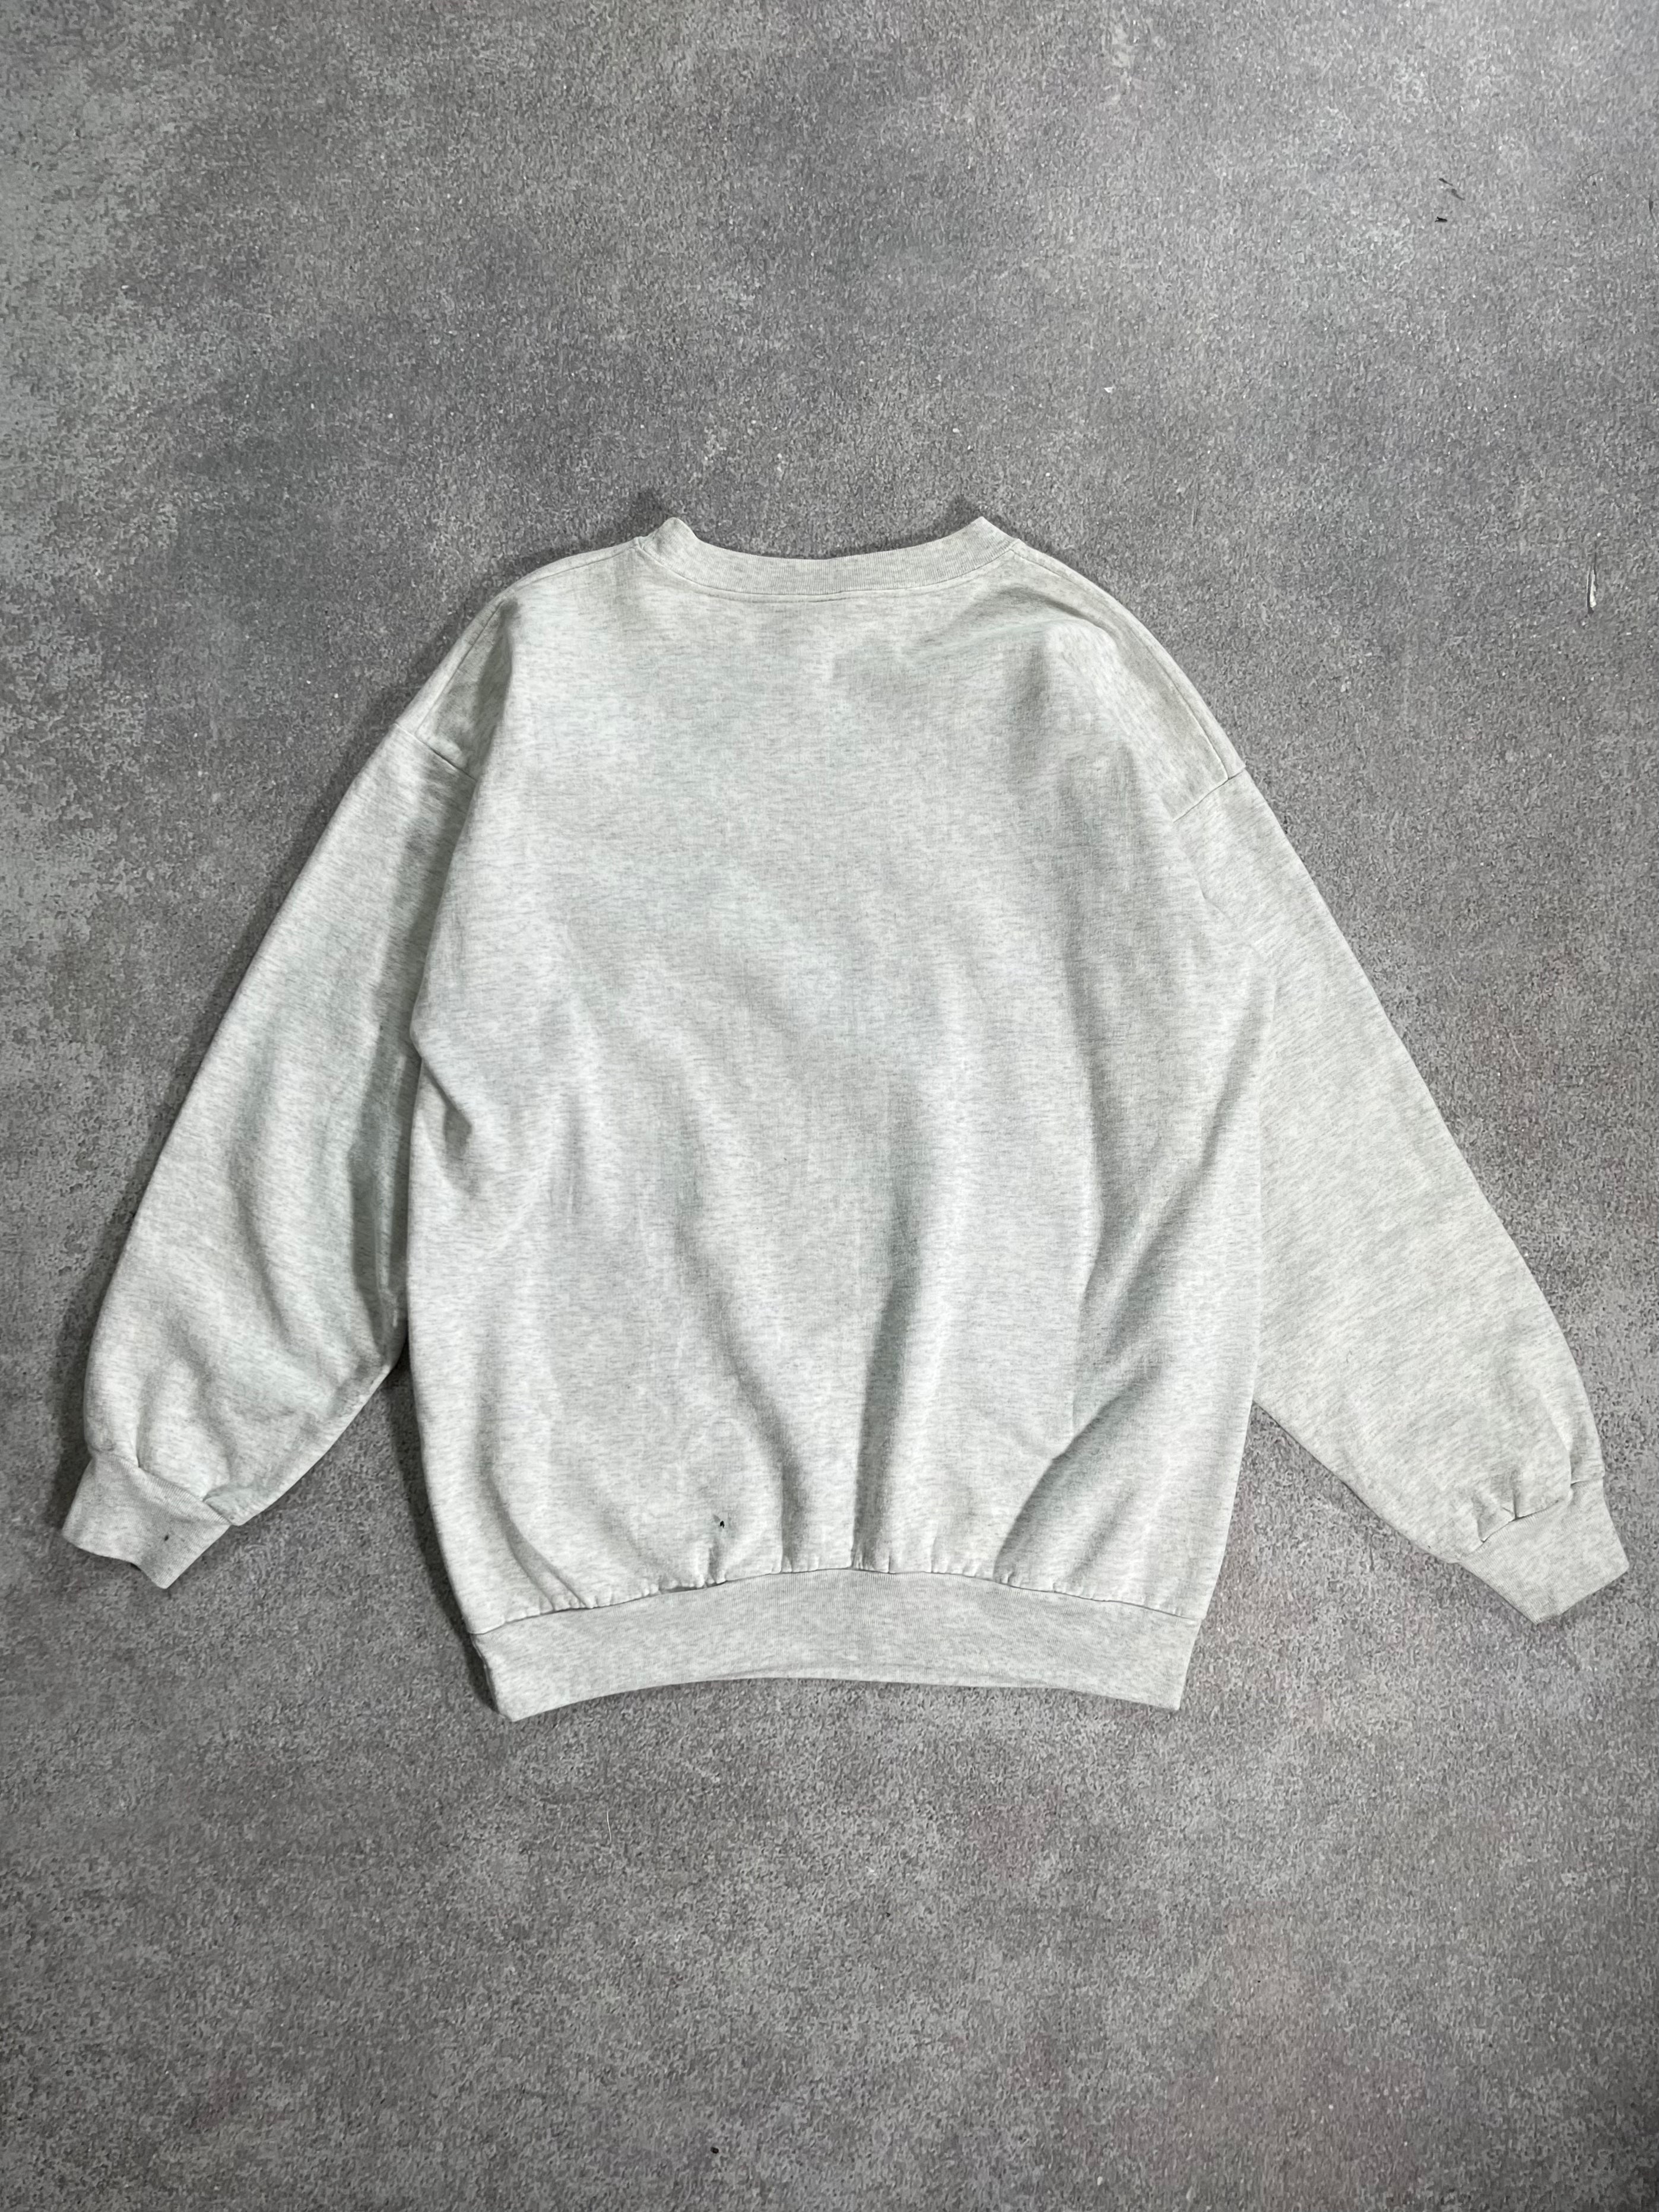 Vintage Dallas Cowboys Sweater White  // Small - RHAGHOUSE VINTAGE